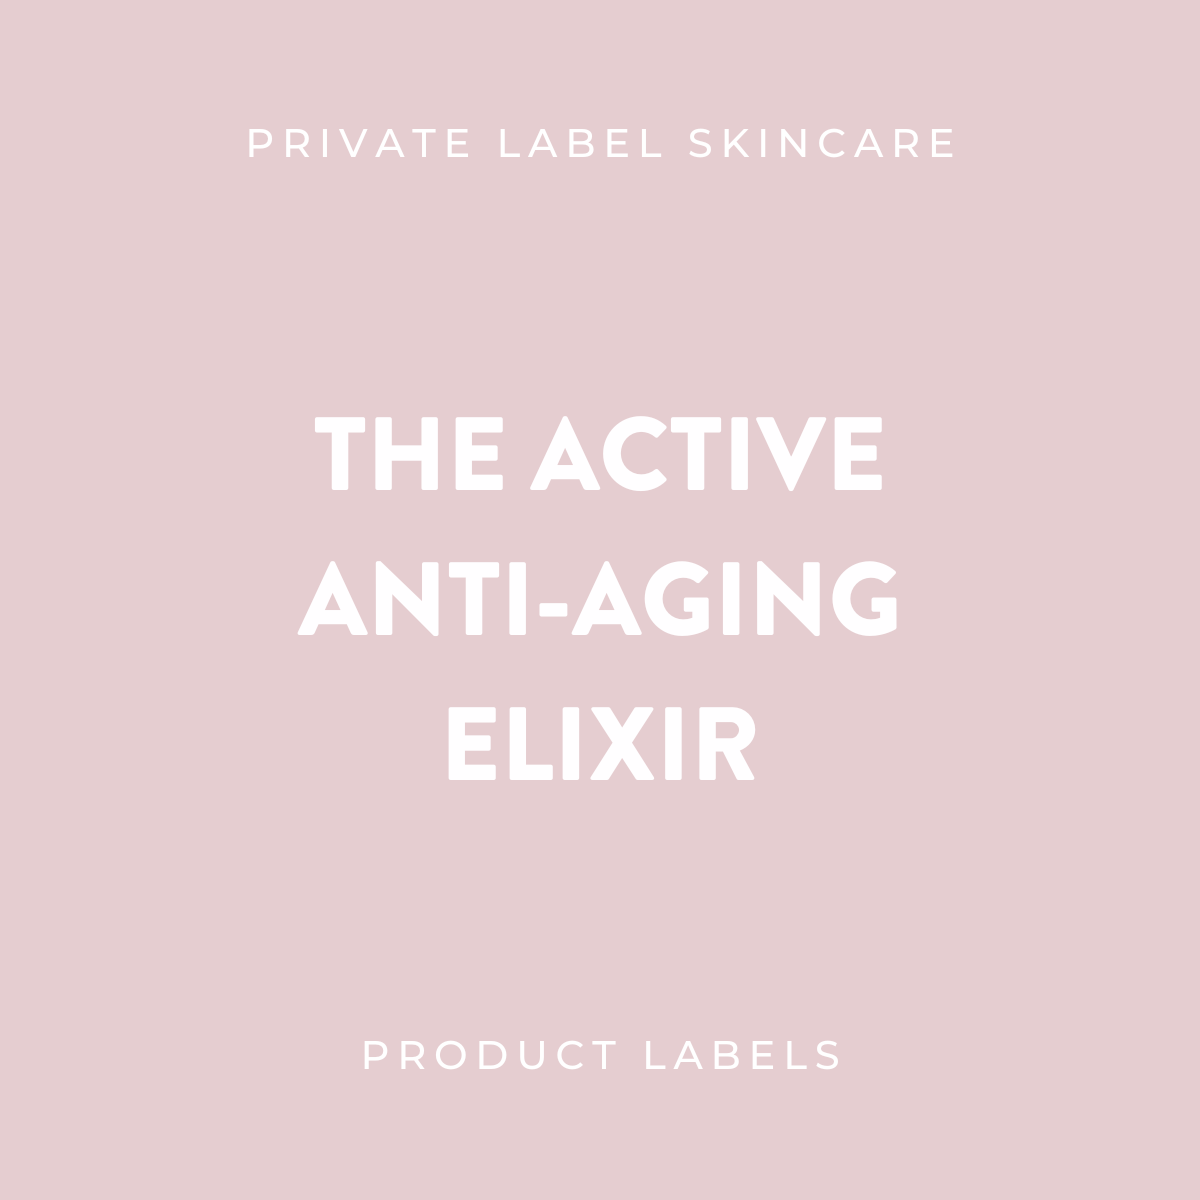 Anti-Aging Elixir Product Labels (x 20 labels)